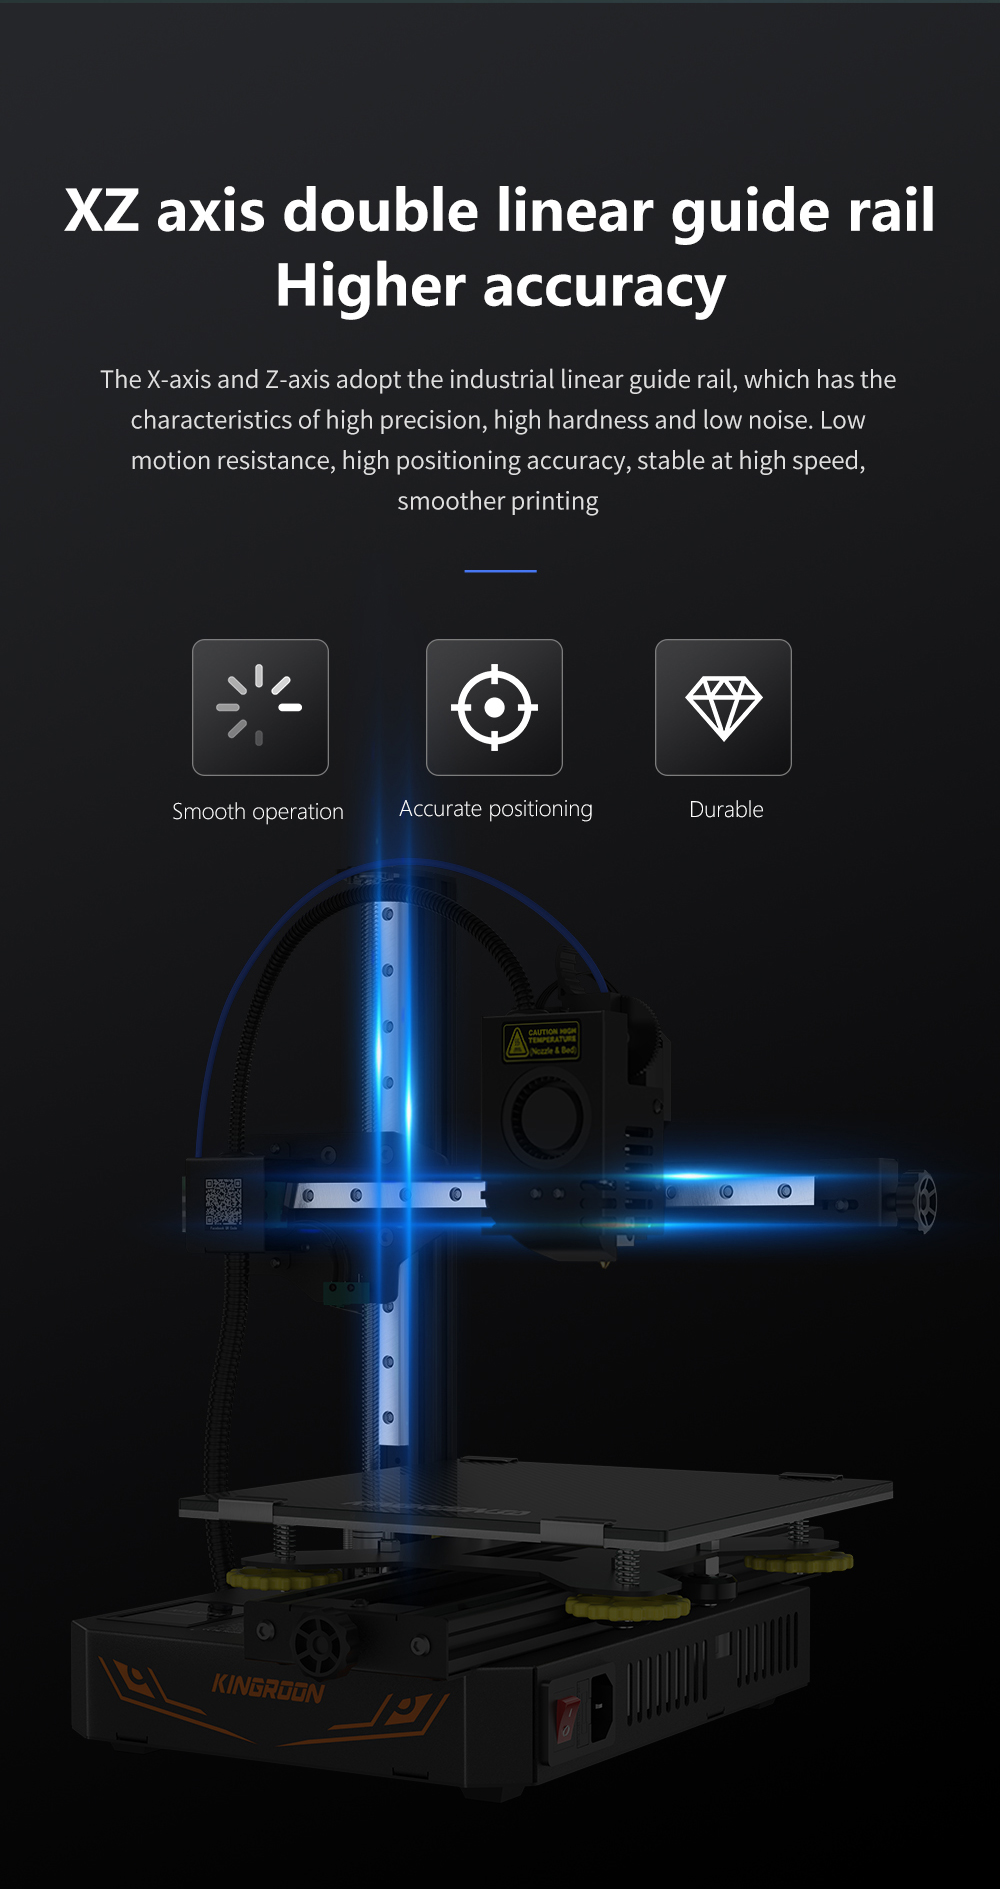 [EU US Direct] KINGROON KP3S PRO 3D Printer KIT Titan Extruder Glass Plate Desktop Belt Tensioner 200*200*200mm MGN12 Guide Rail